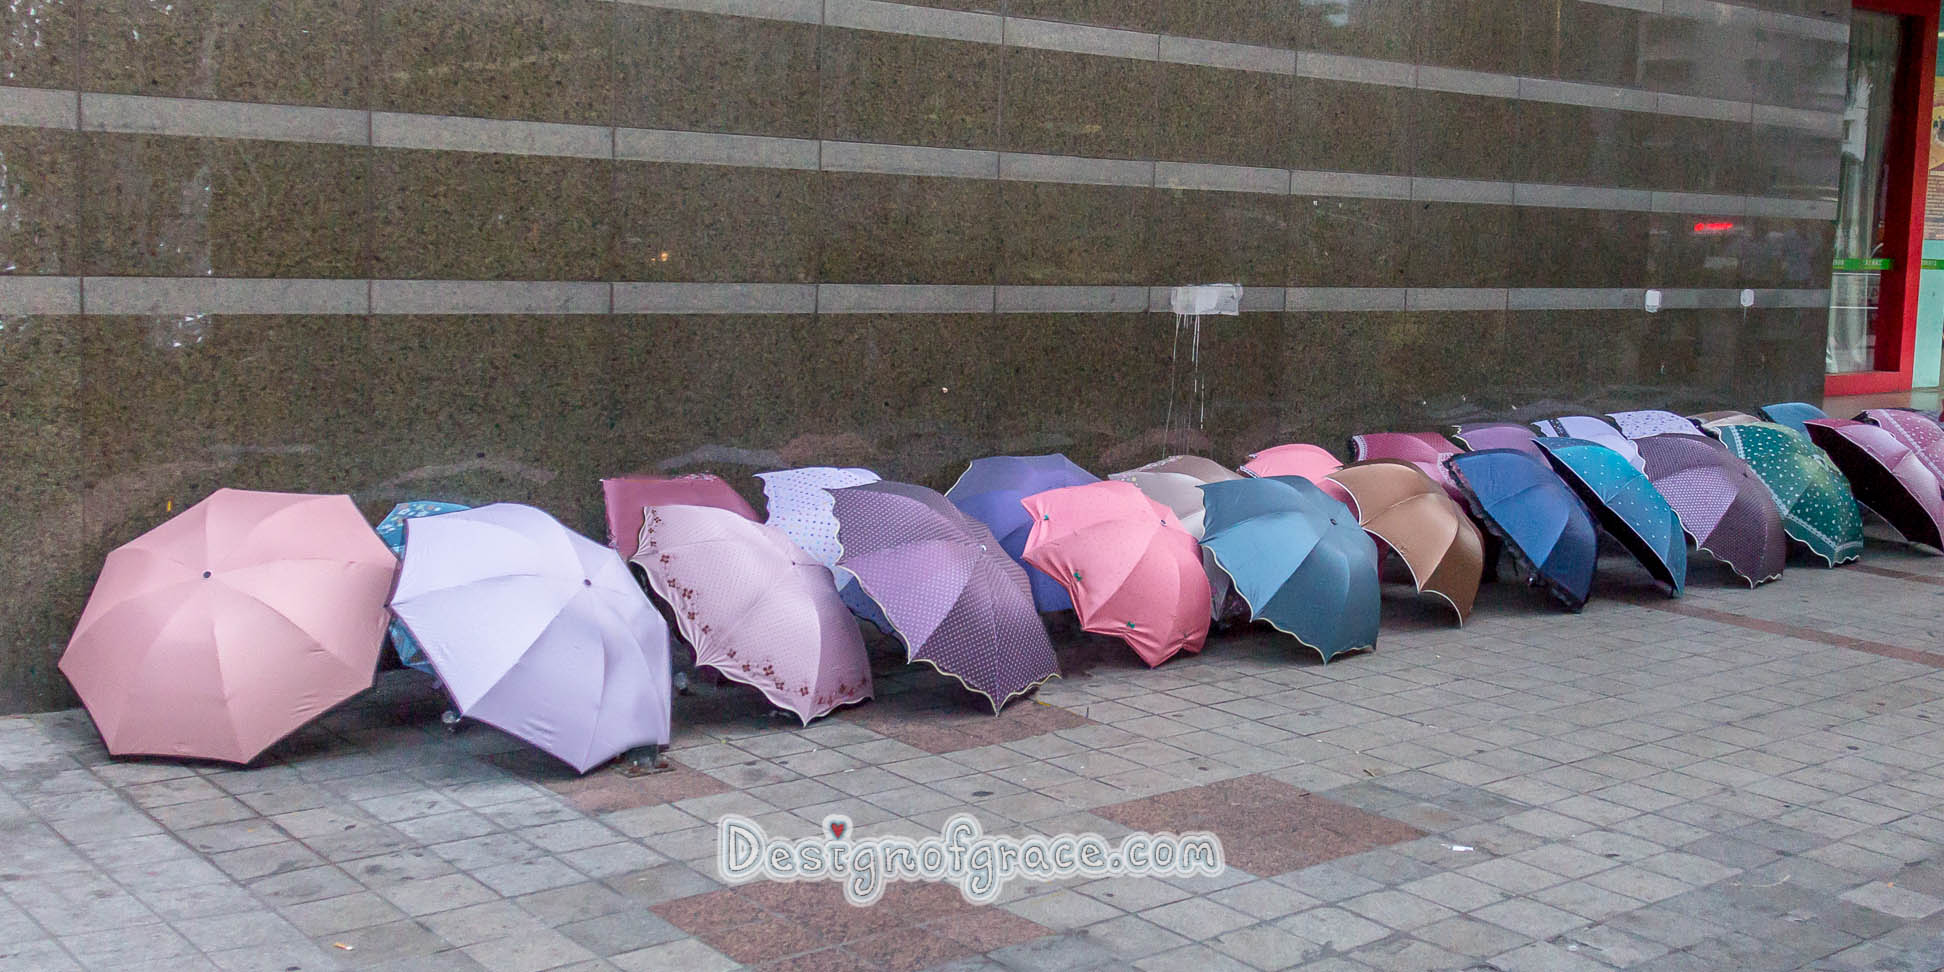 Row of umbrellas After